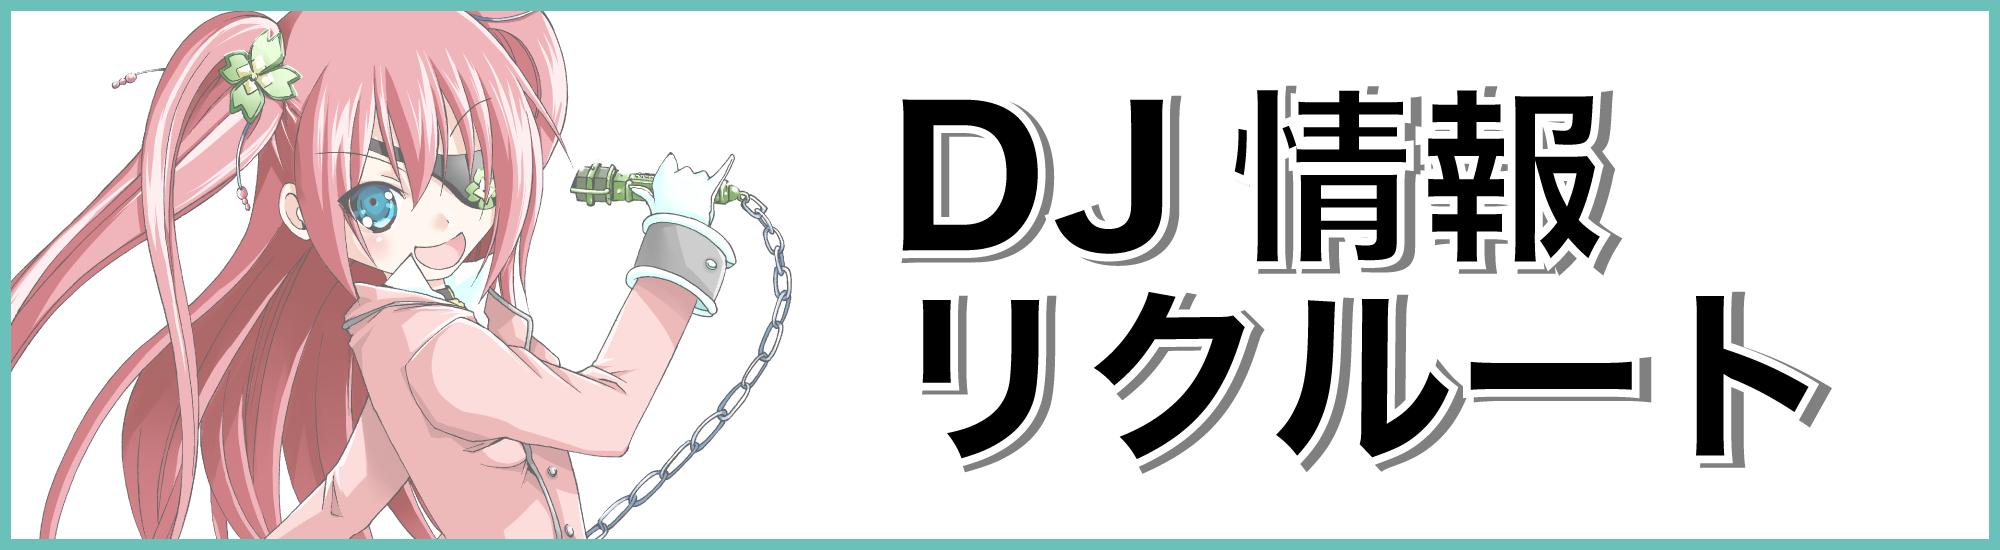 DJ情報・リクルート